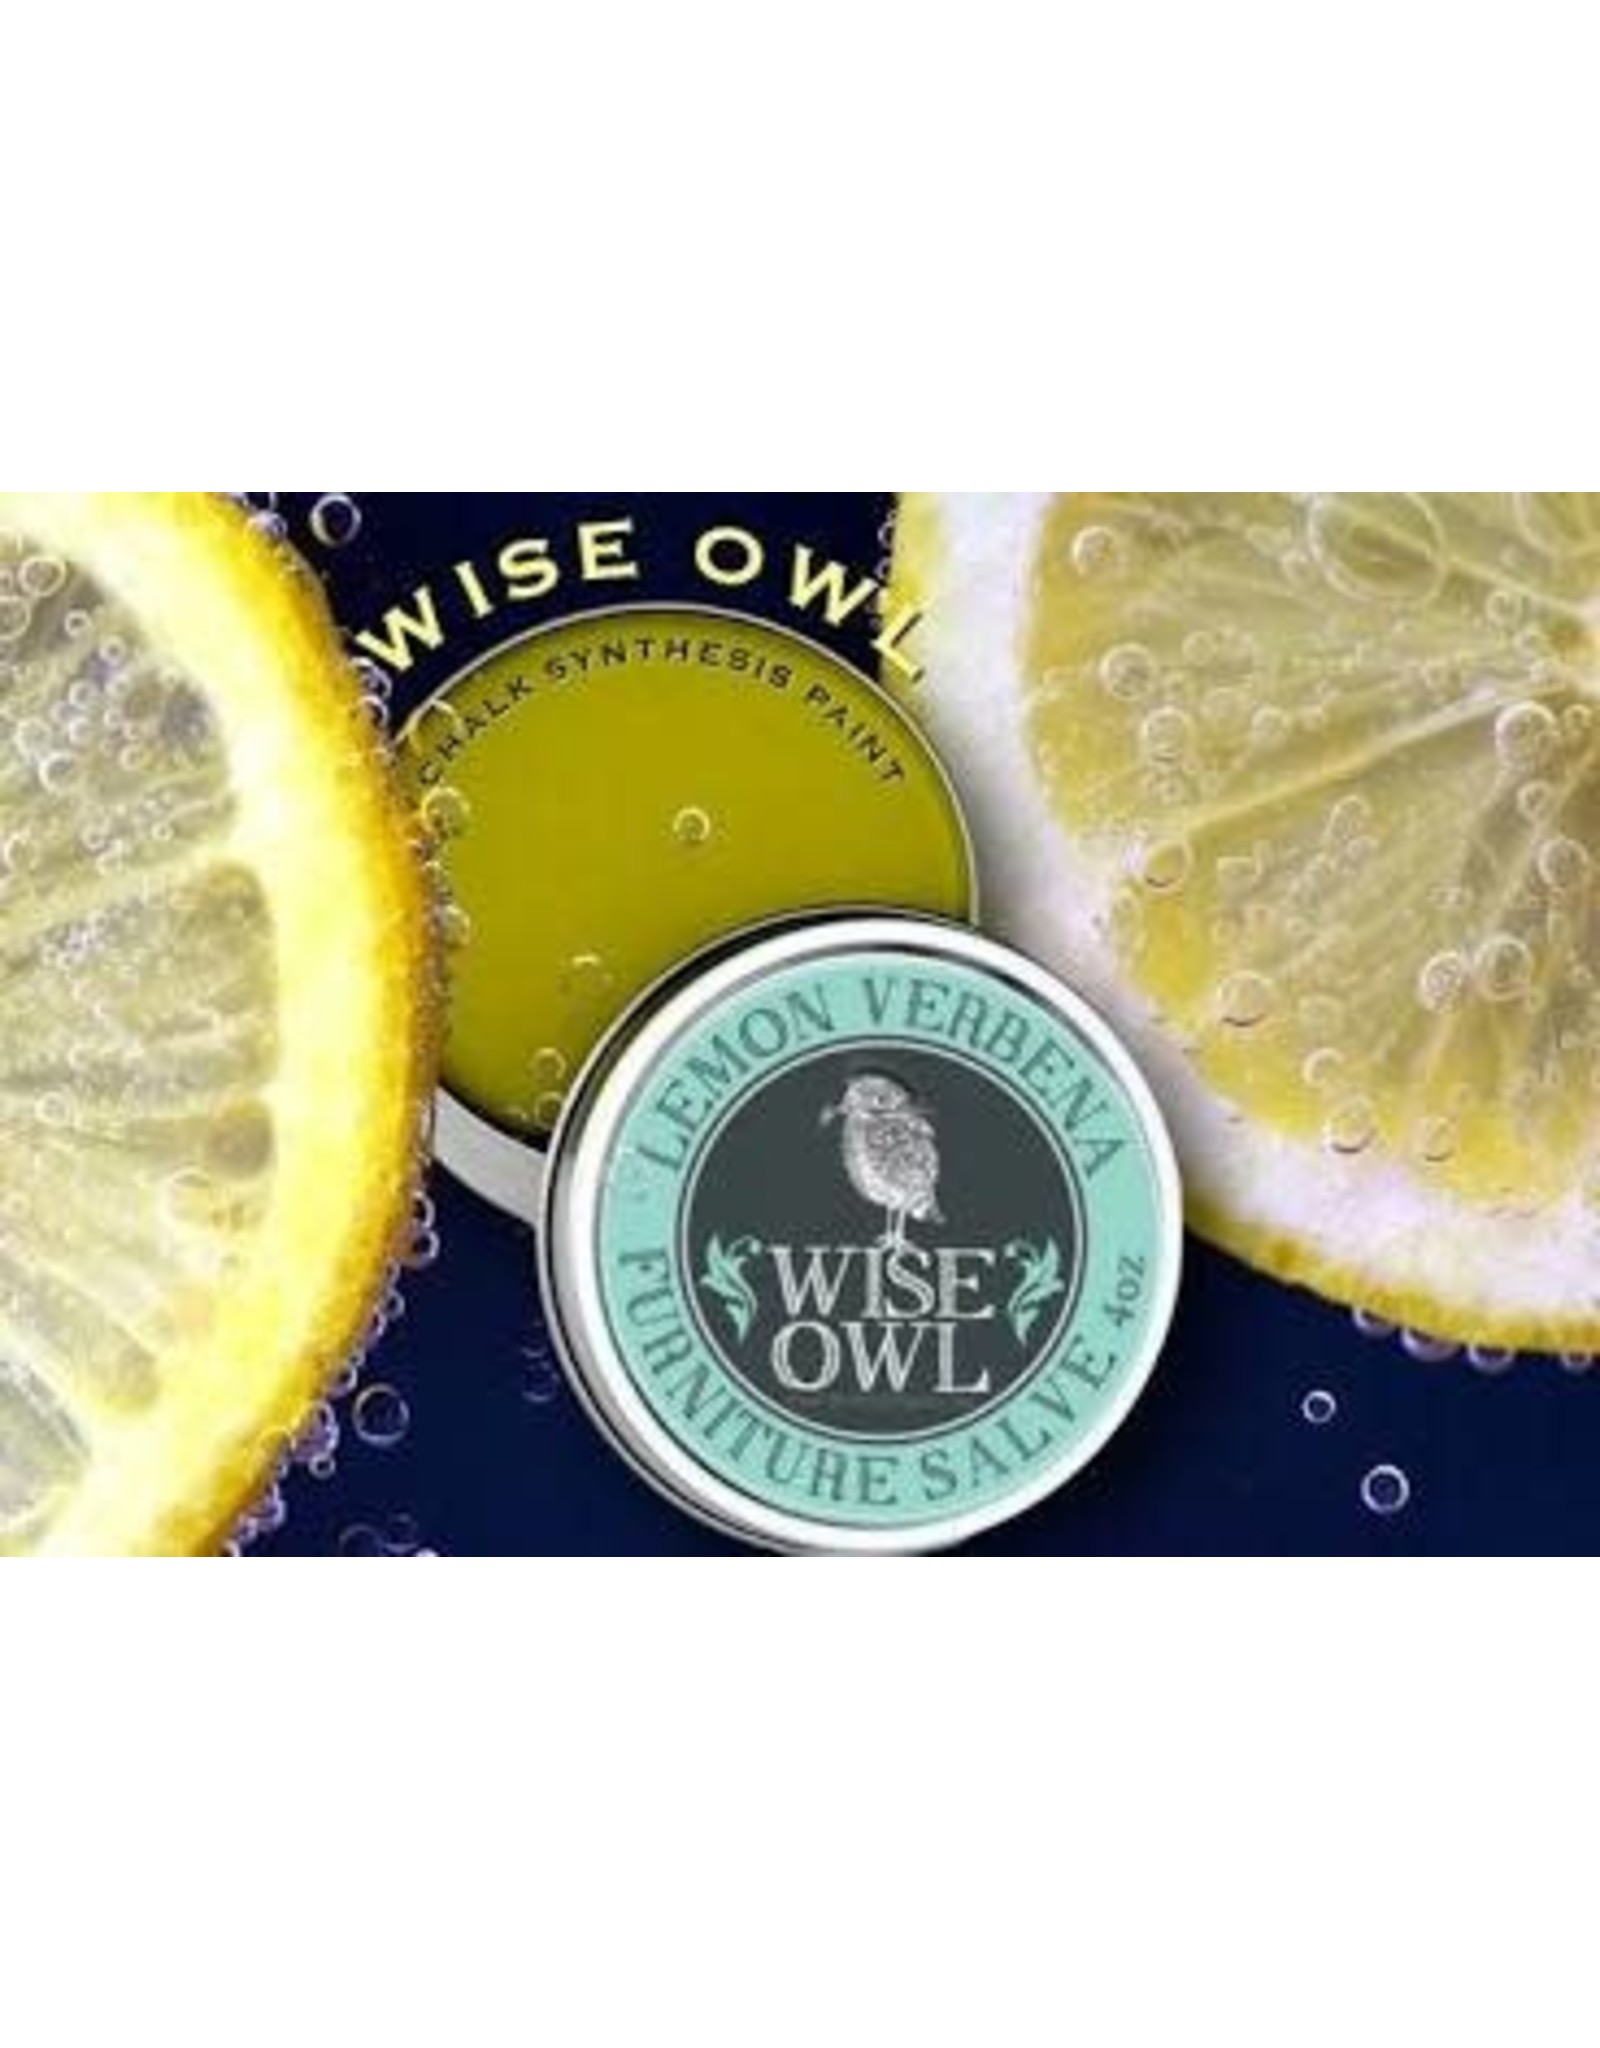 Wise Owl Paint Furniture Salve-Lemon Verbena 8oz